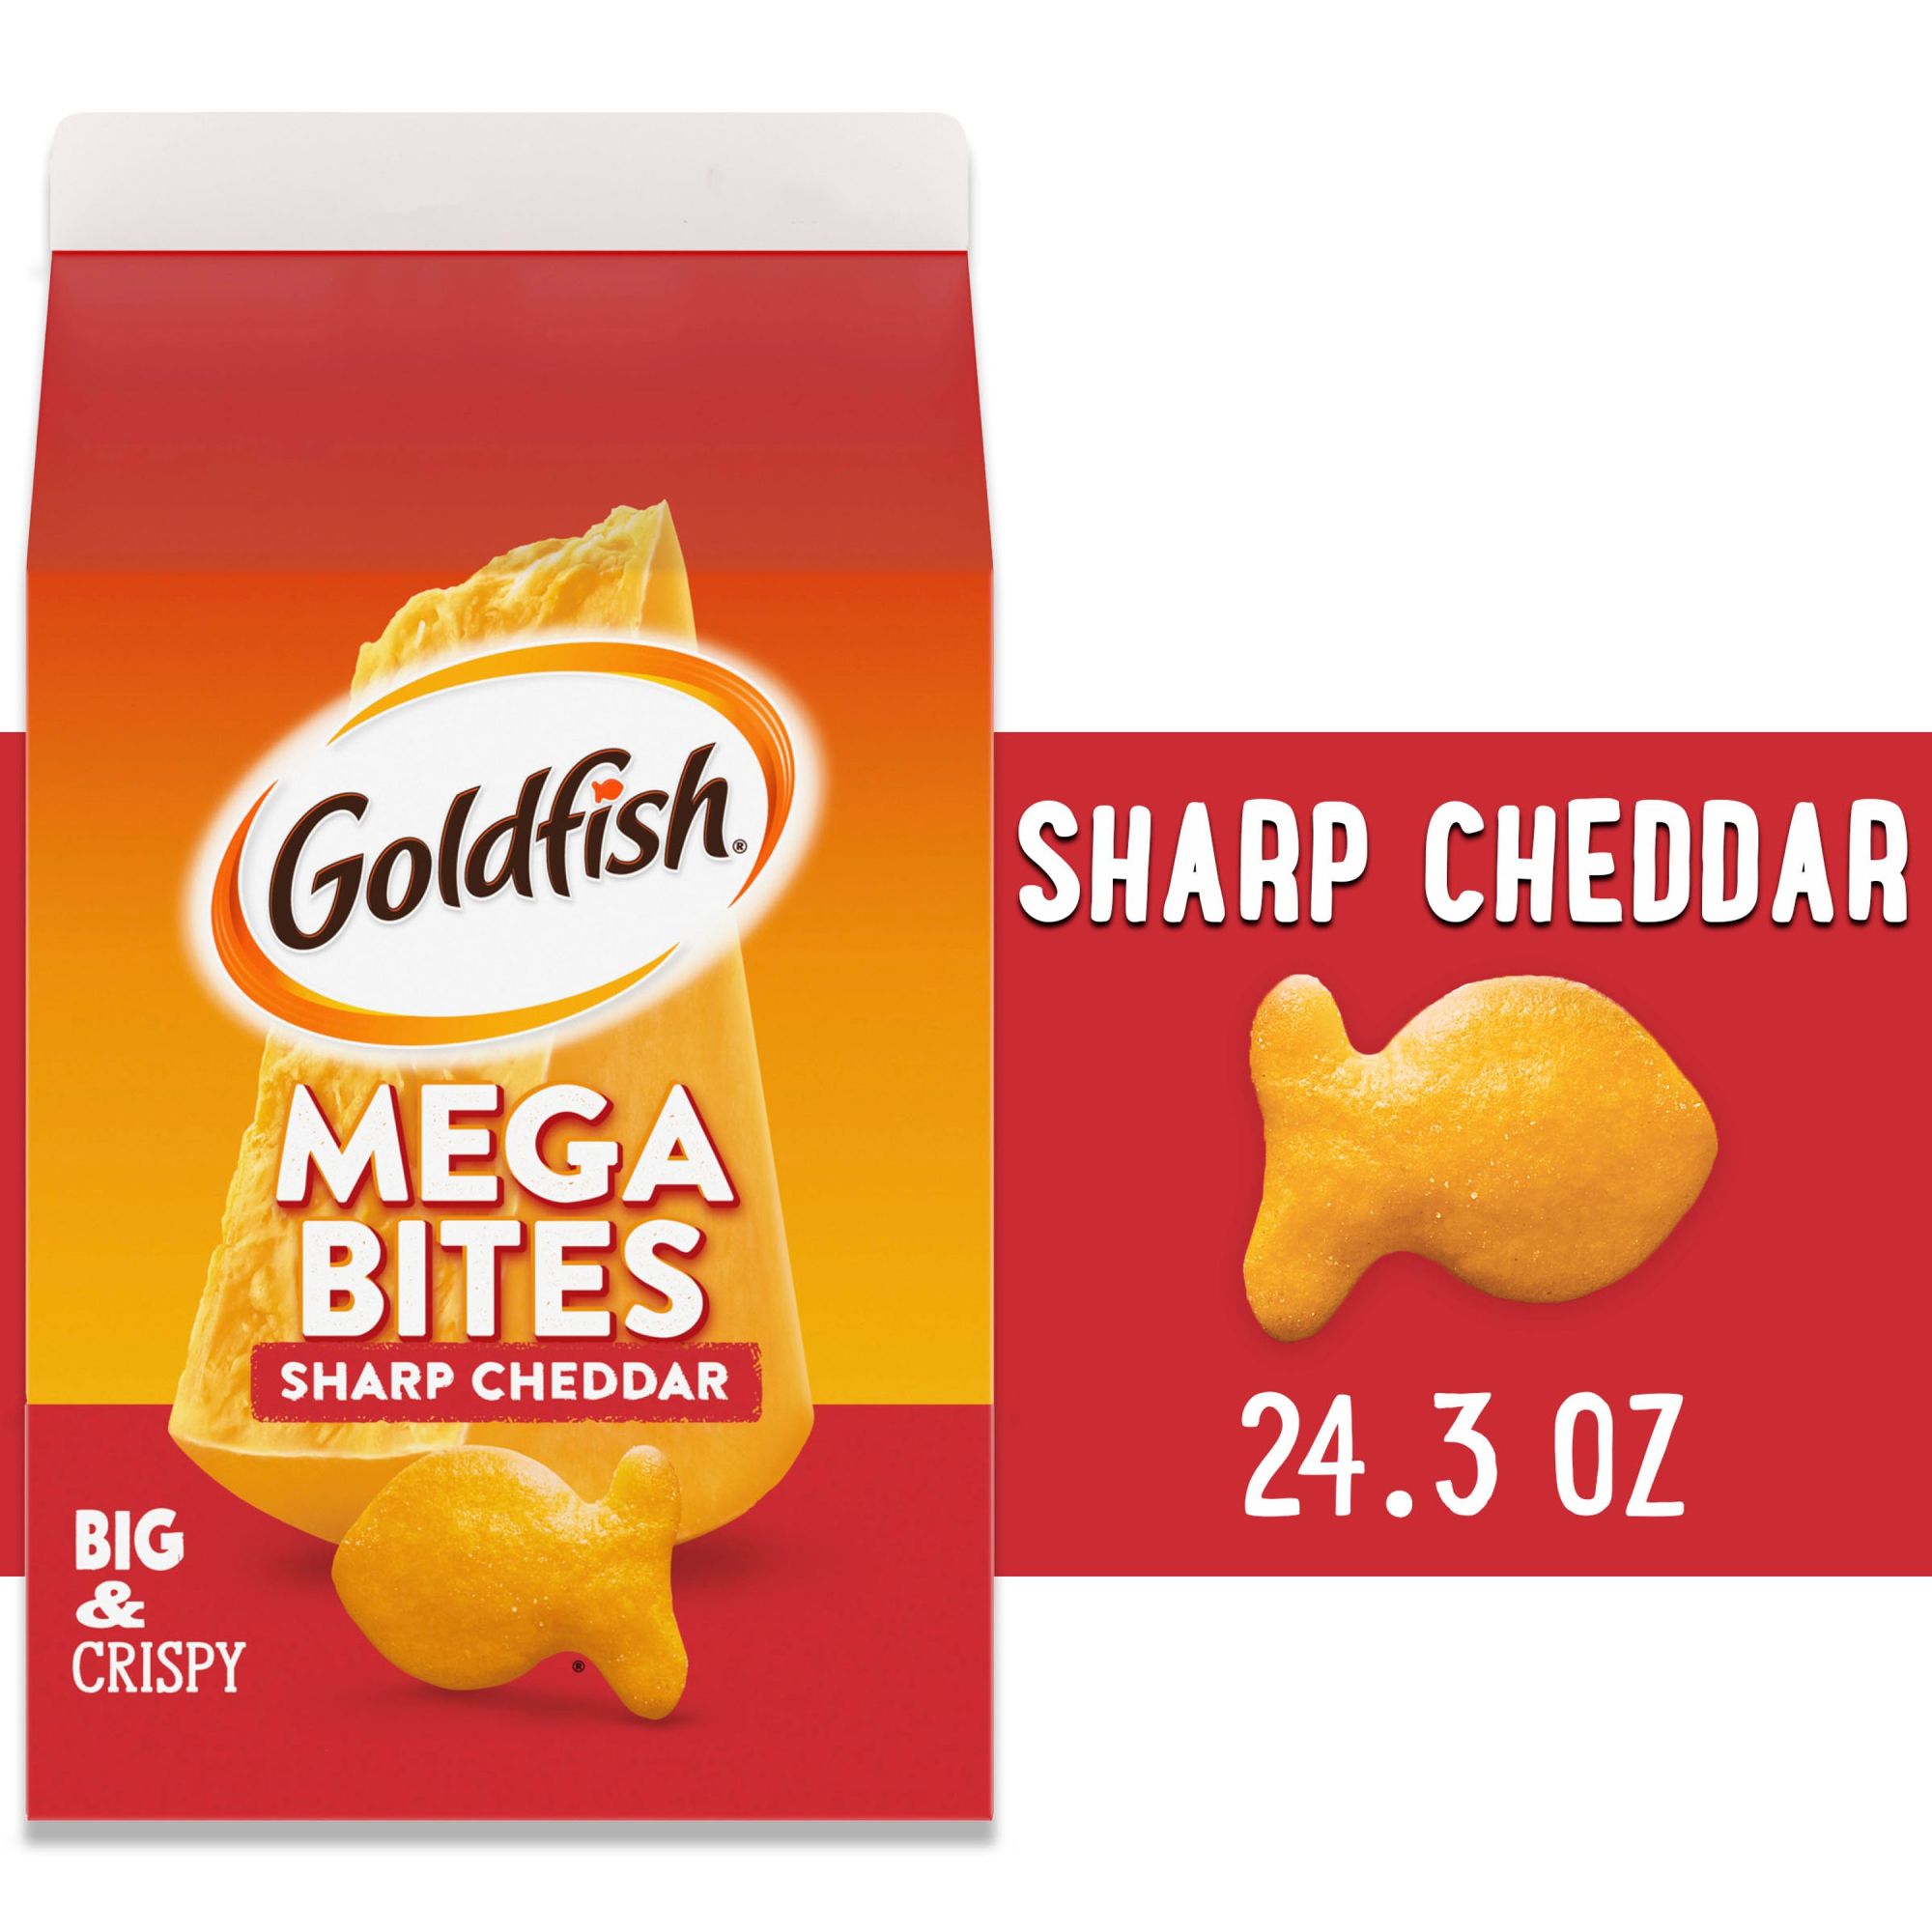 Goldfish Mega Bites, Sharp Cheddar Crackers, 24.3 oz Carton - image 1 of 9